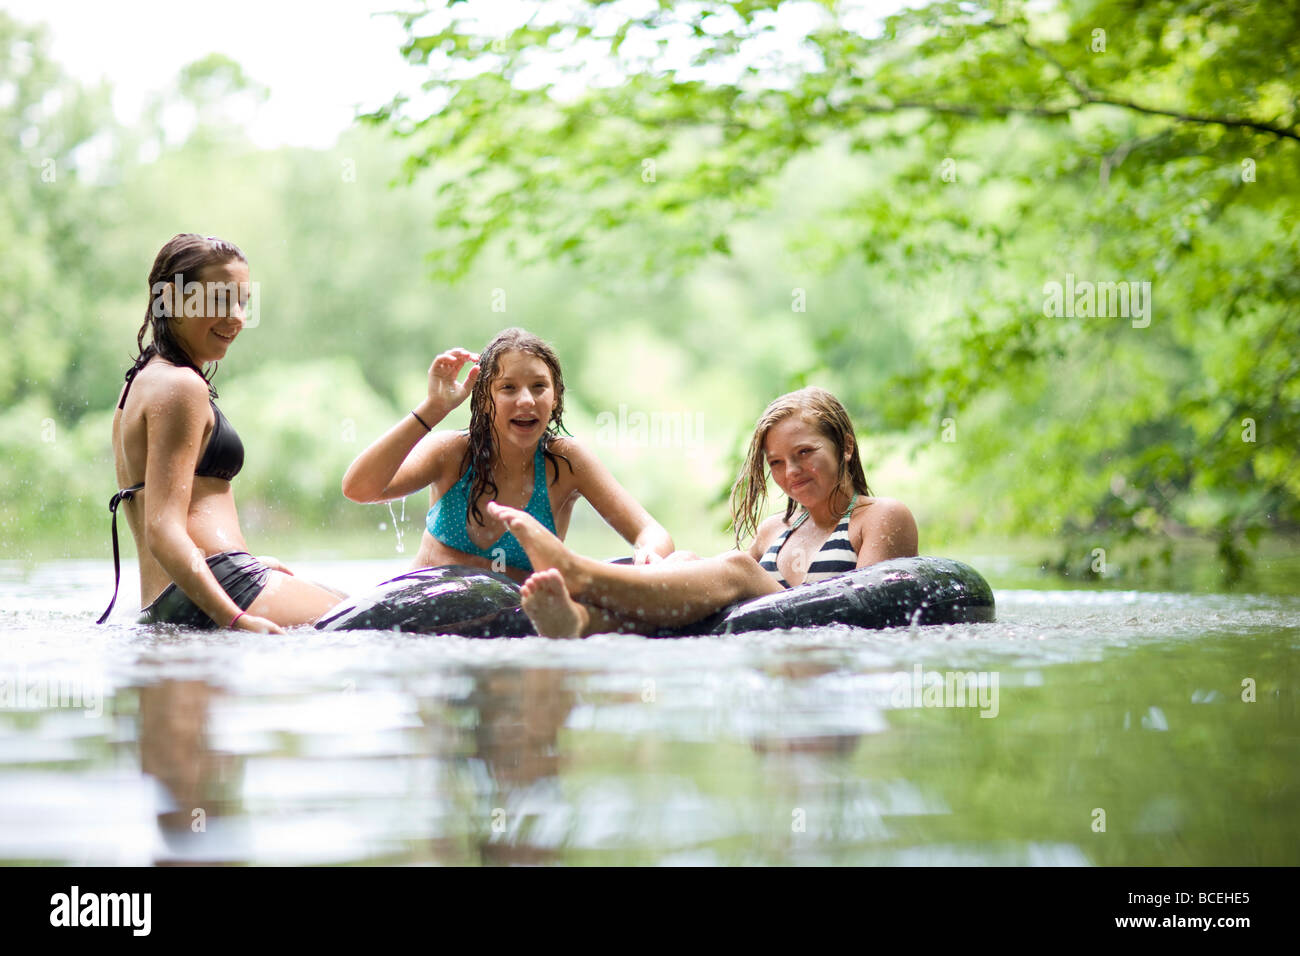 Teenagers having fun in innertubes in the water Stock Photo